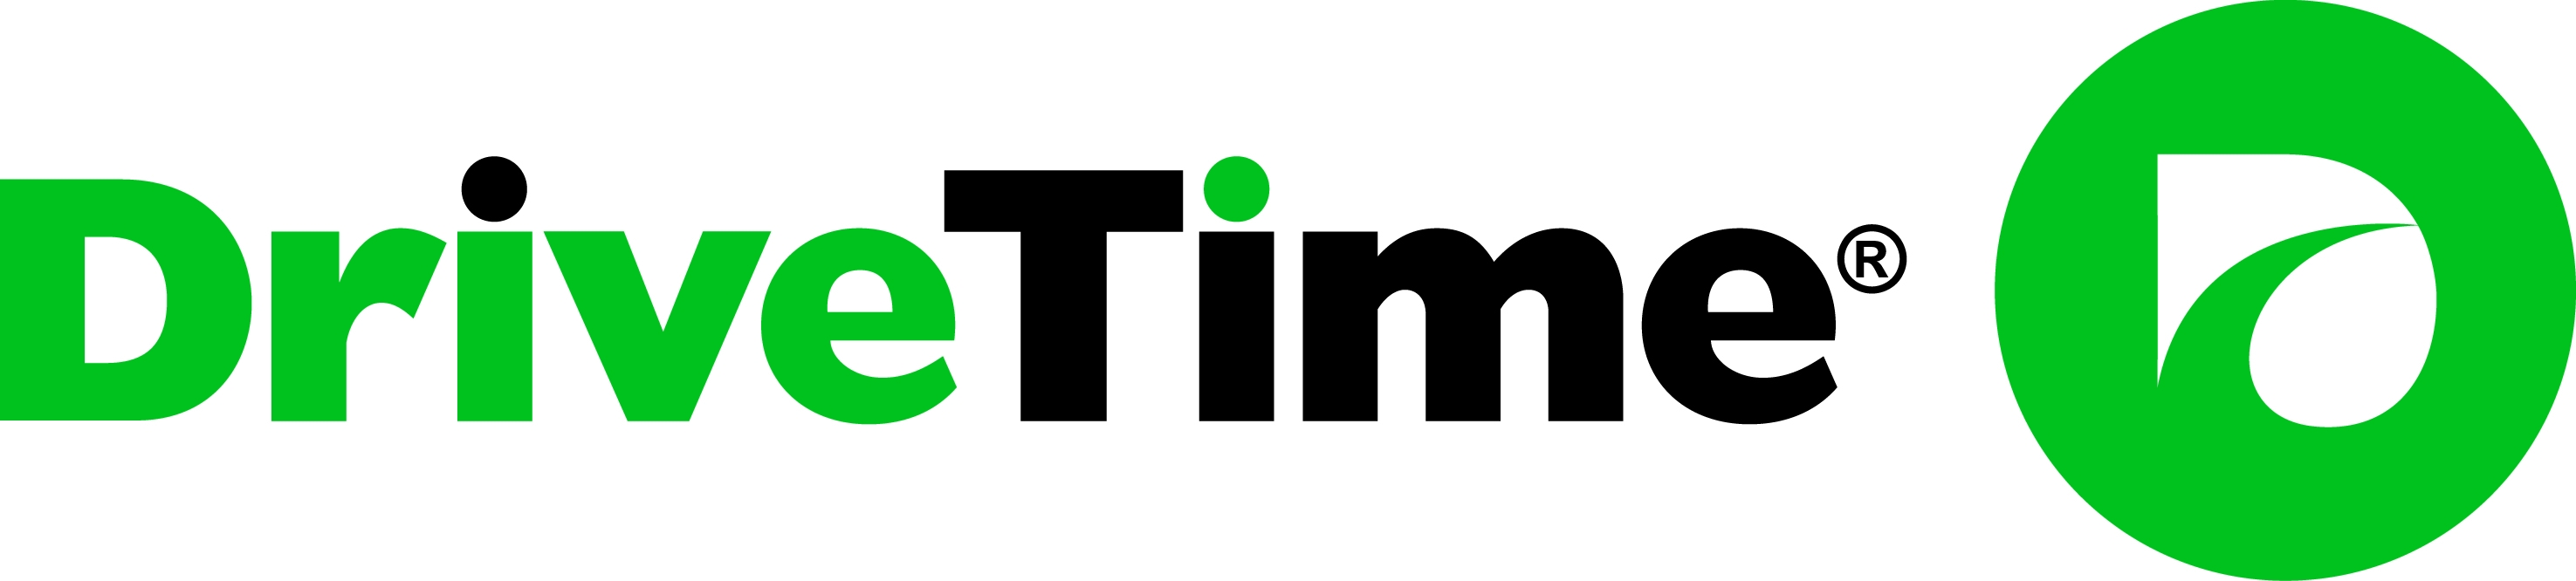 Drive Time Company Logo